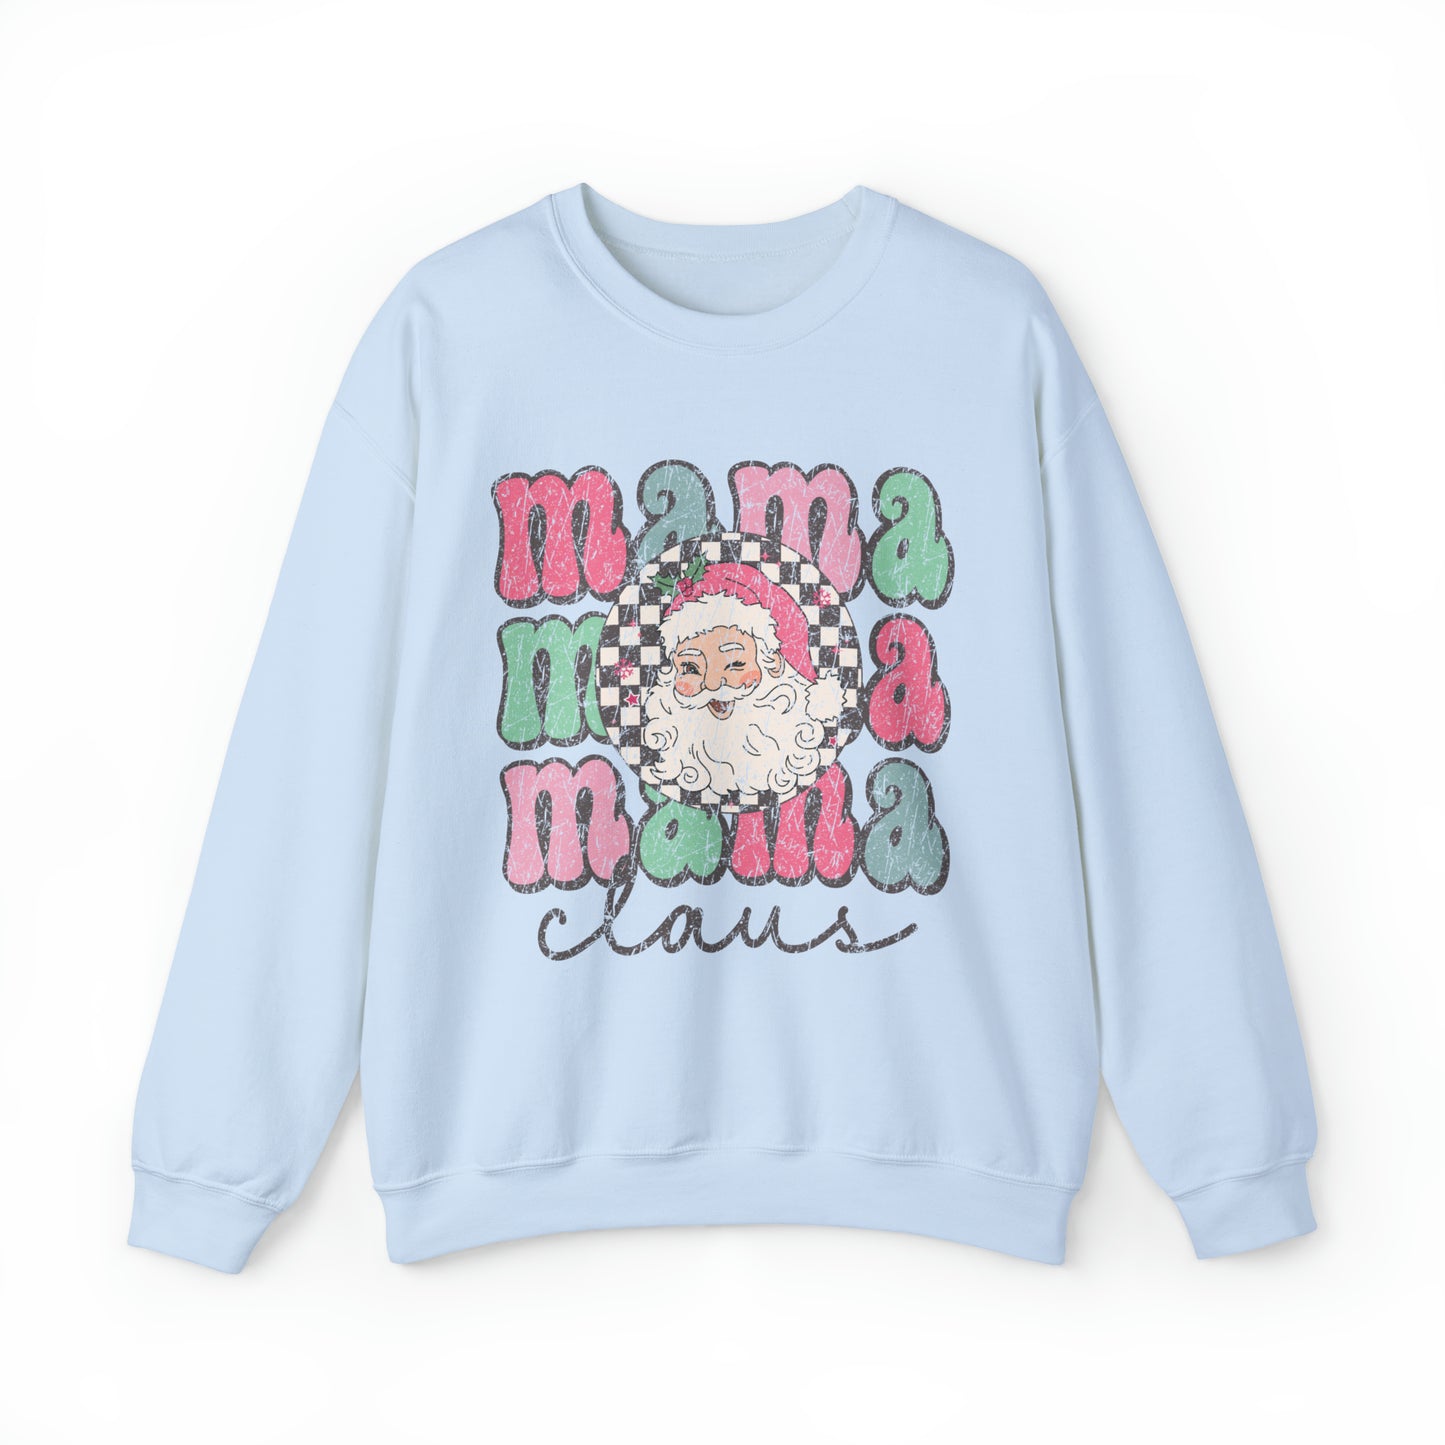 MAMA Claus Retro Distressed Women's Christmas Sweatshirt